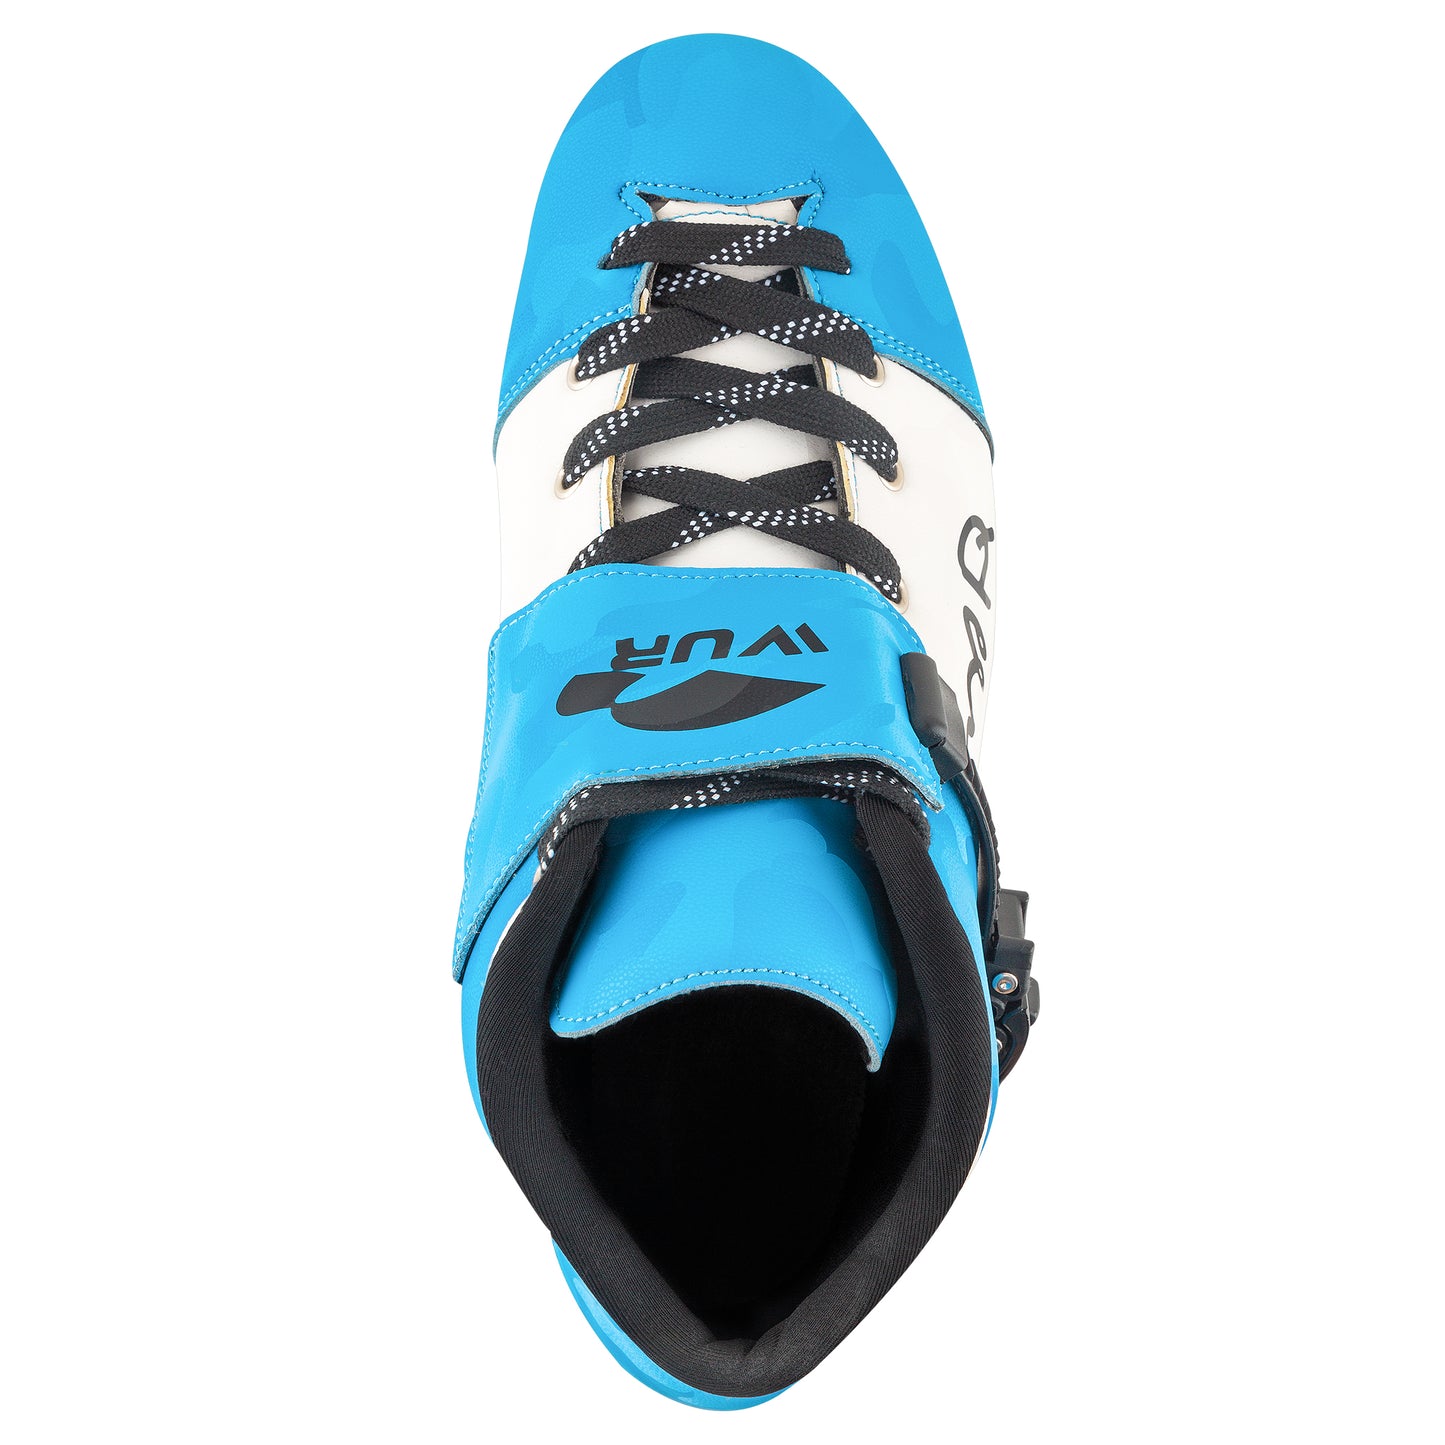 ZQ speed skate boots blue